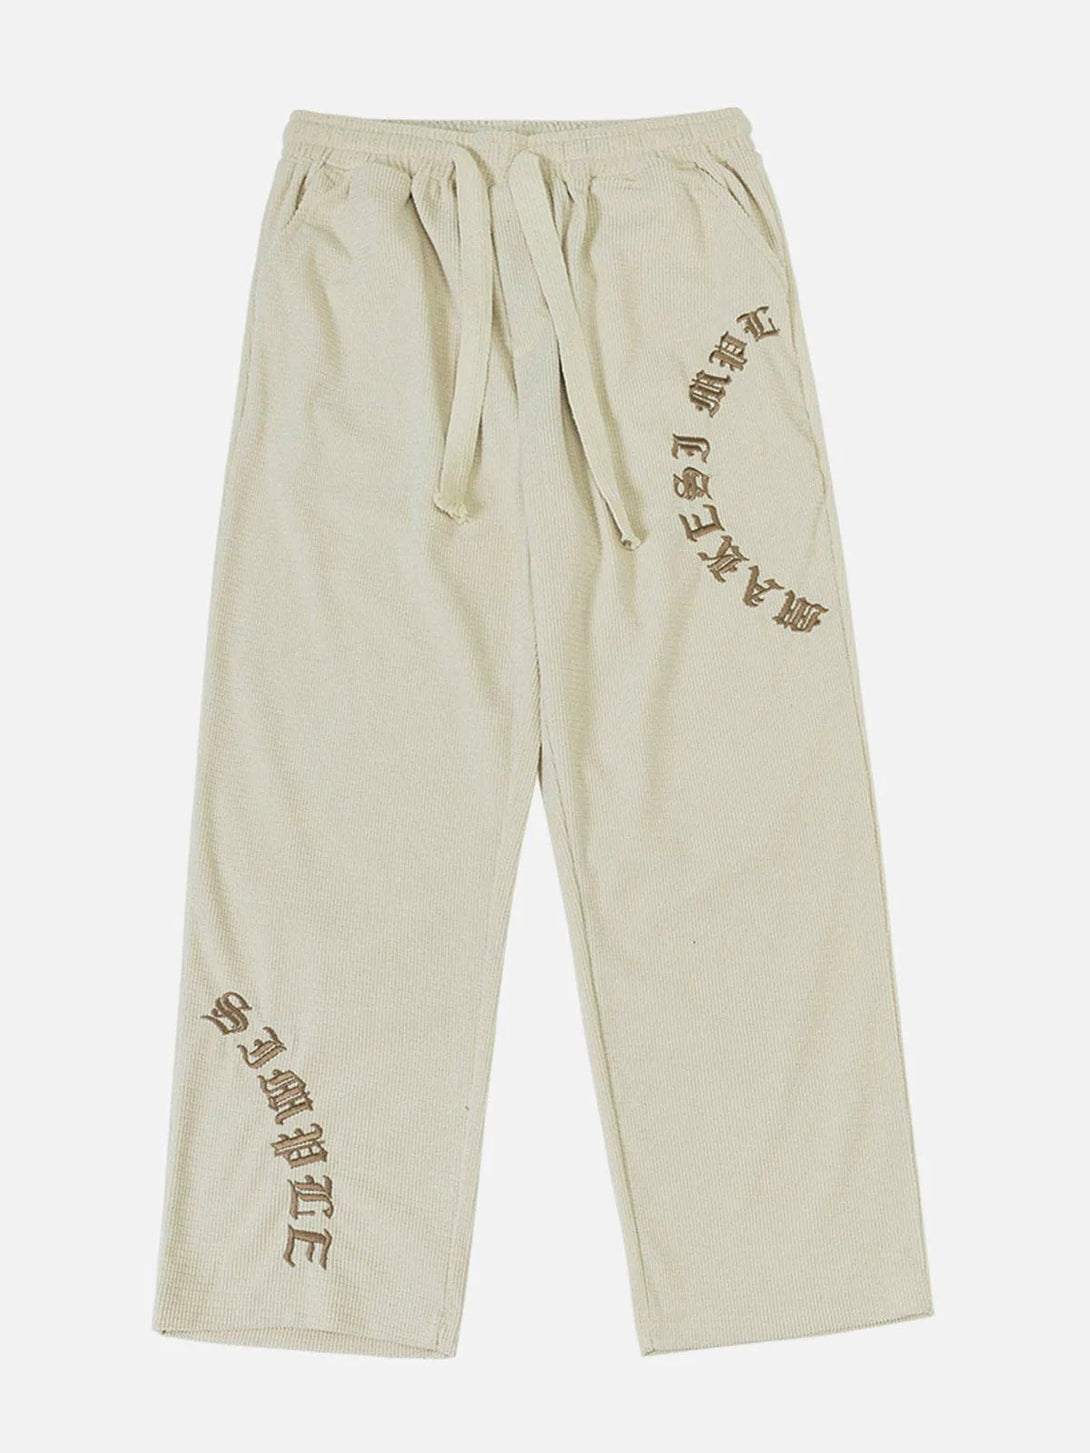 Majesda® - Waffle Embroidery Pants outfit ideas streetwear fashion